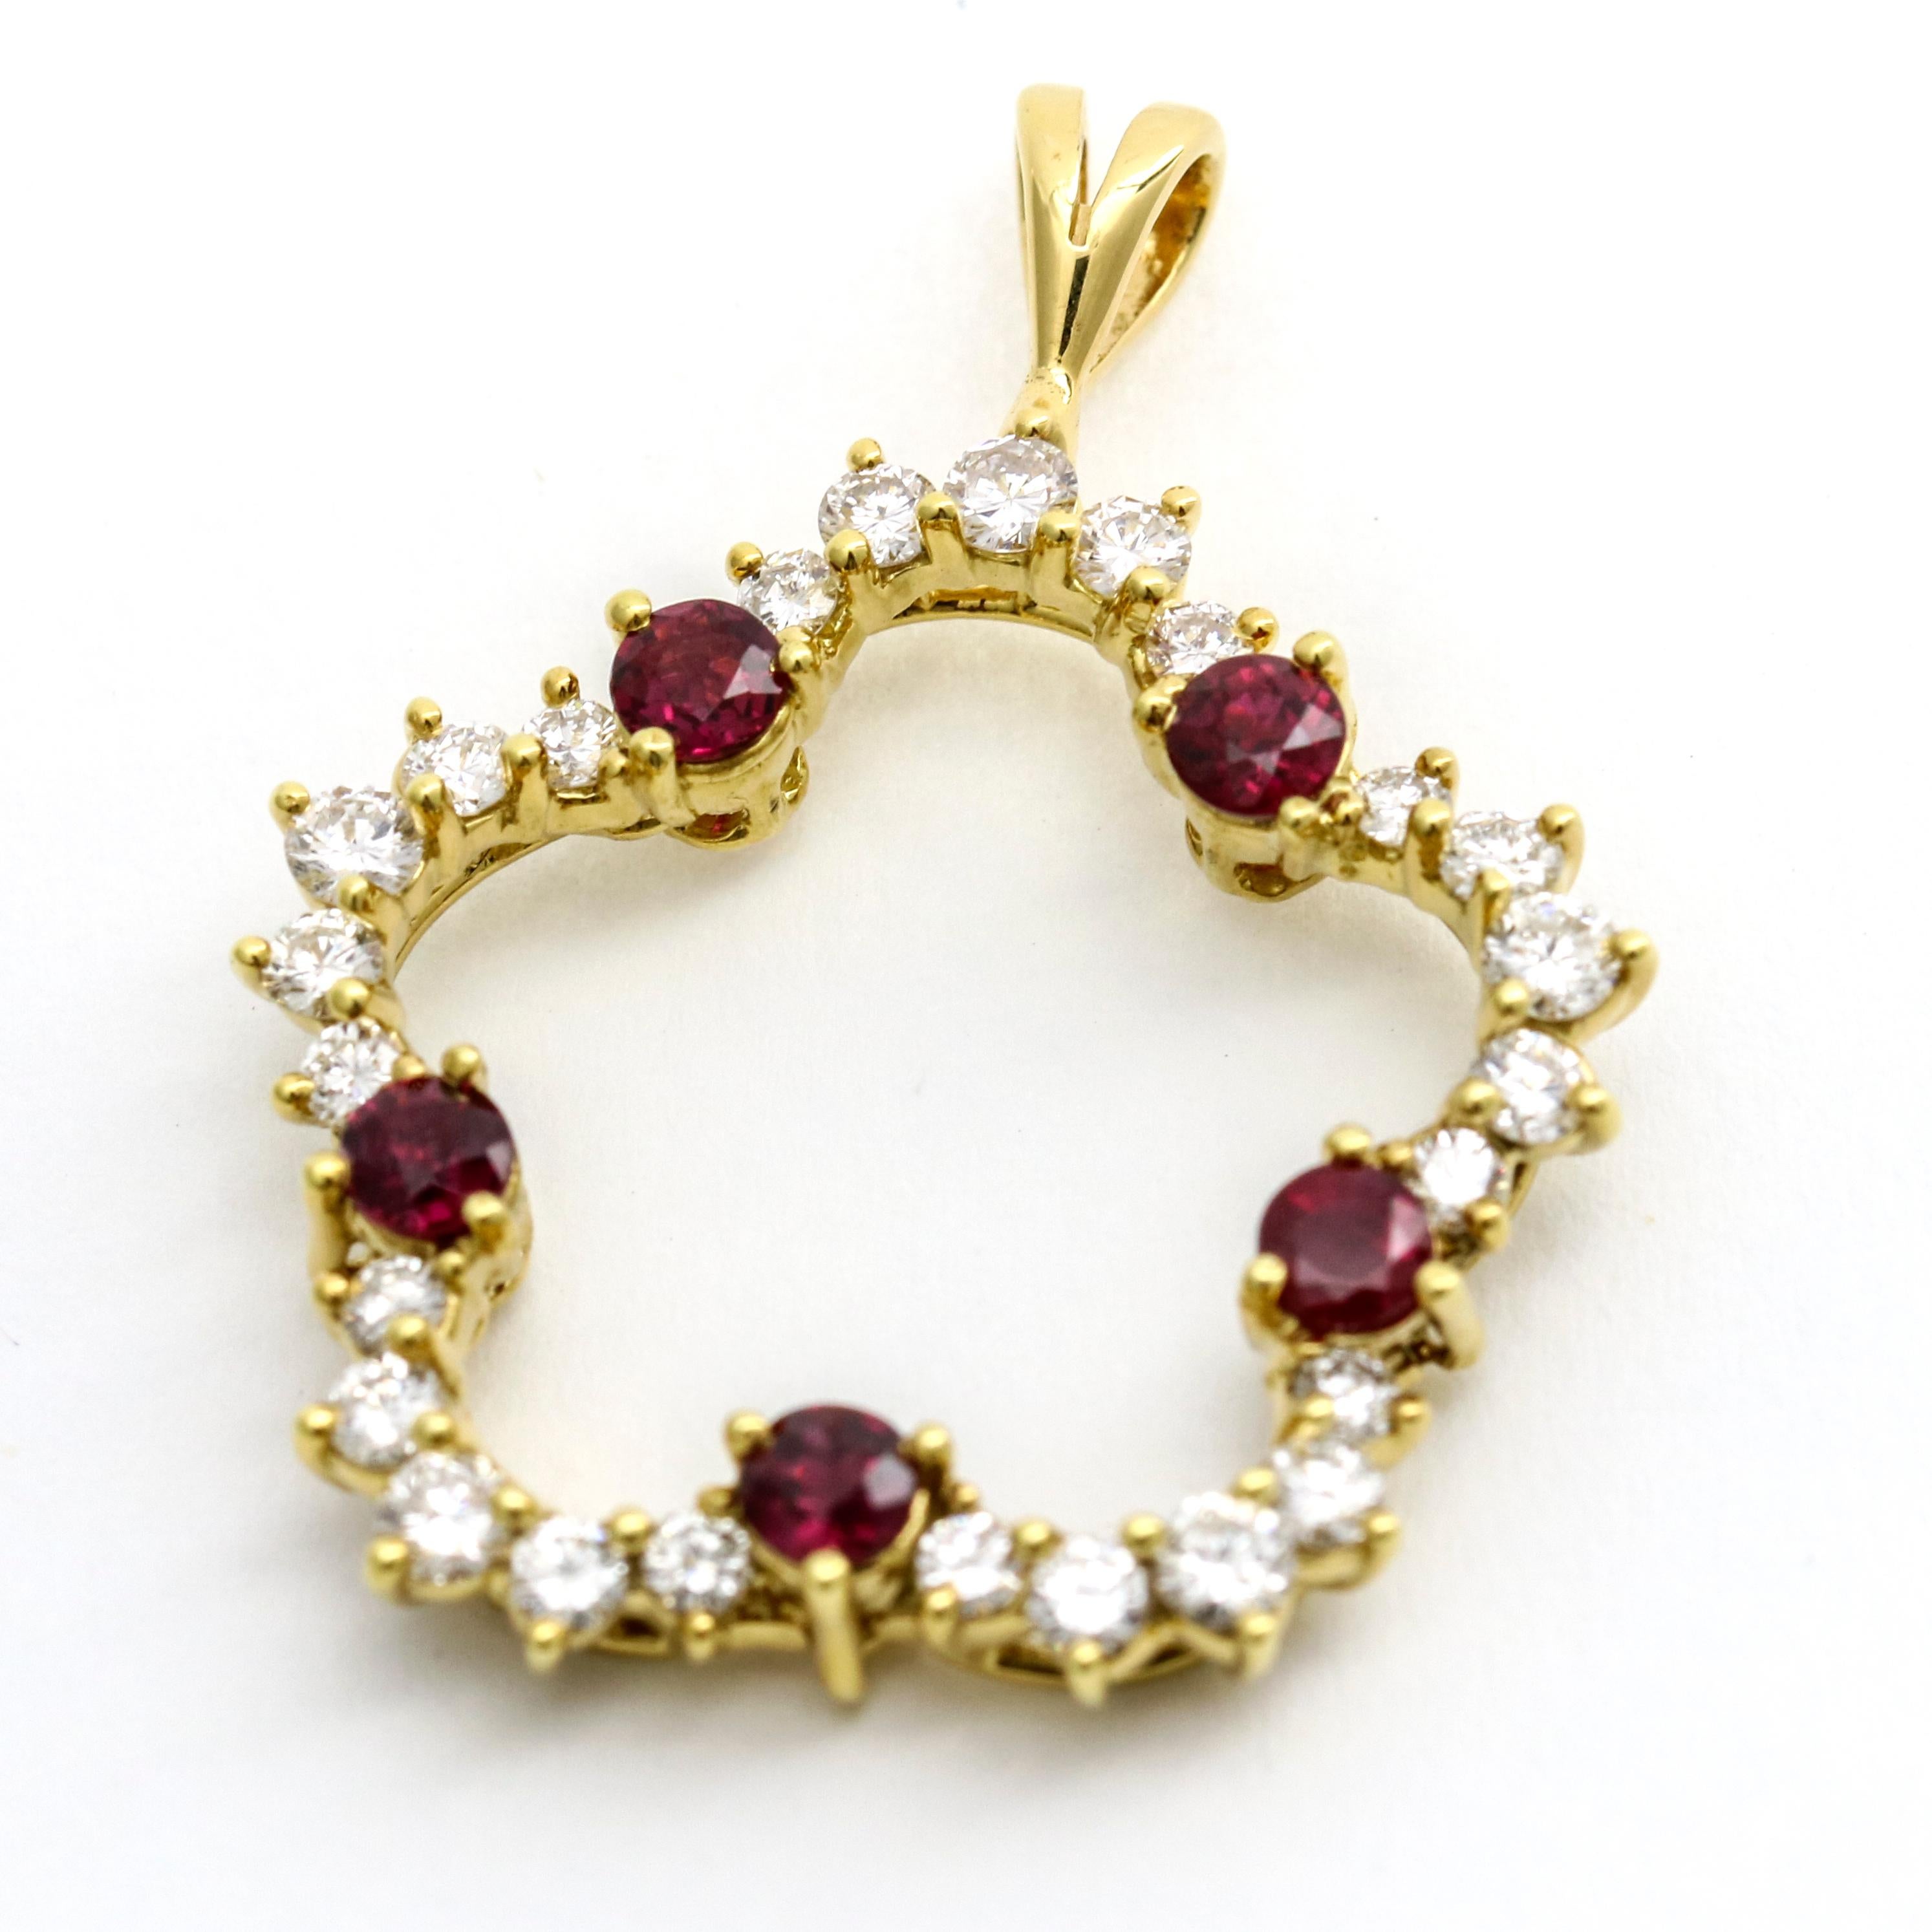 Kurt Wayne diamond and ruby pendant in 18k yellow gold. Originally a brooch modified to wear as pendant. 

Diamond total carat weight, .70 carat. 
Ruby total carat weight, .75 carat.